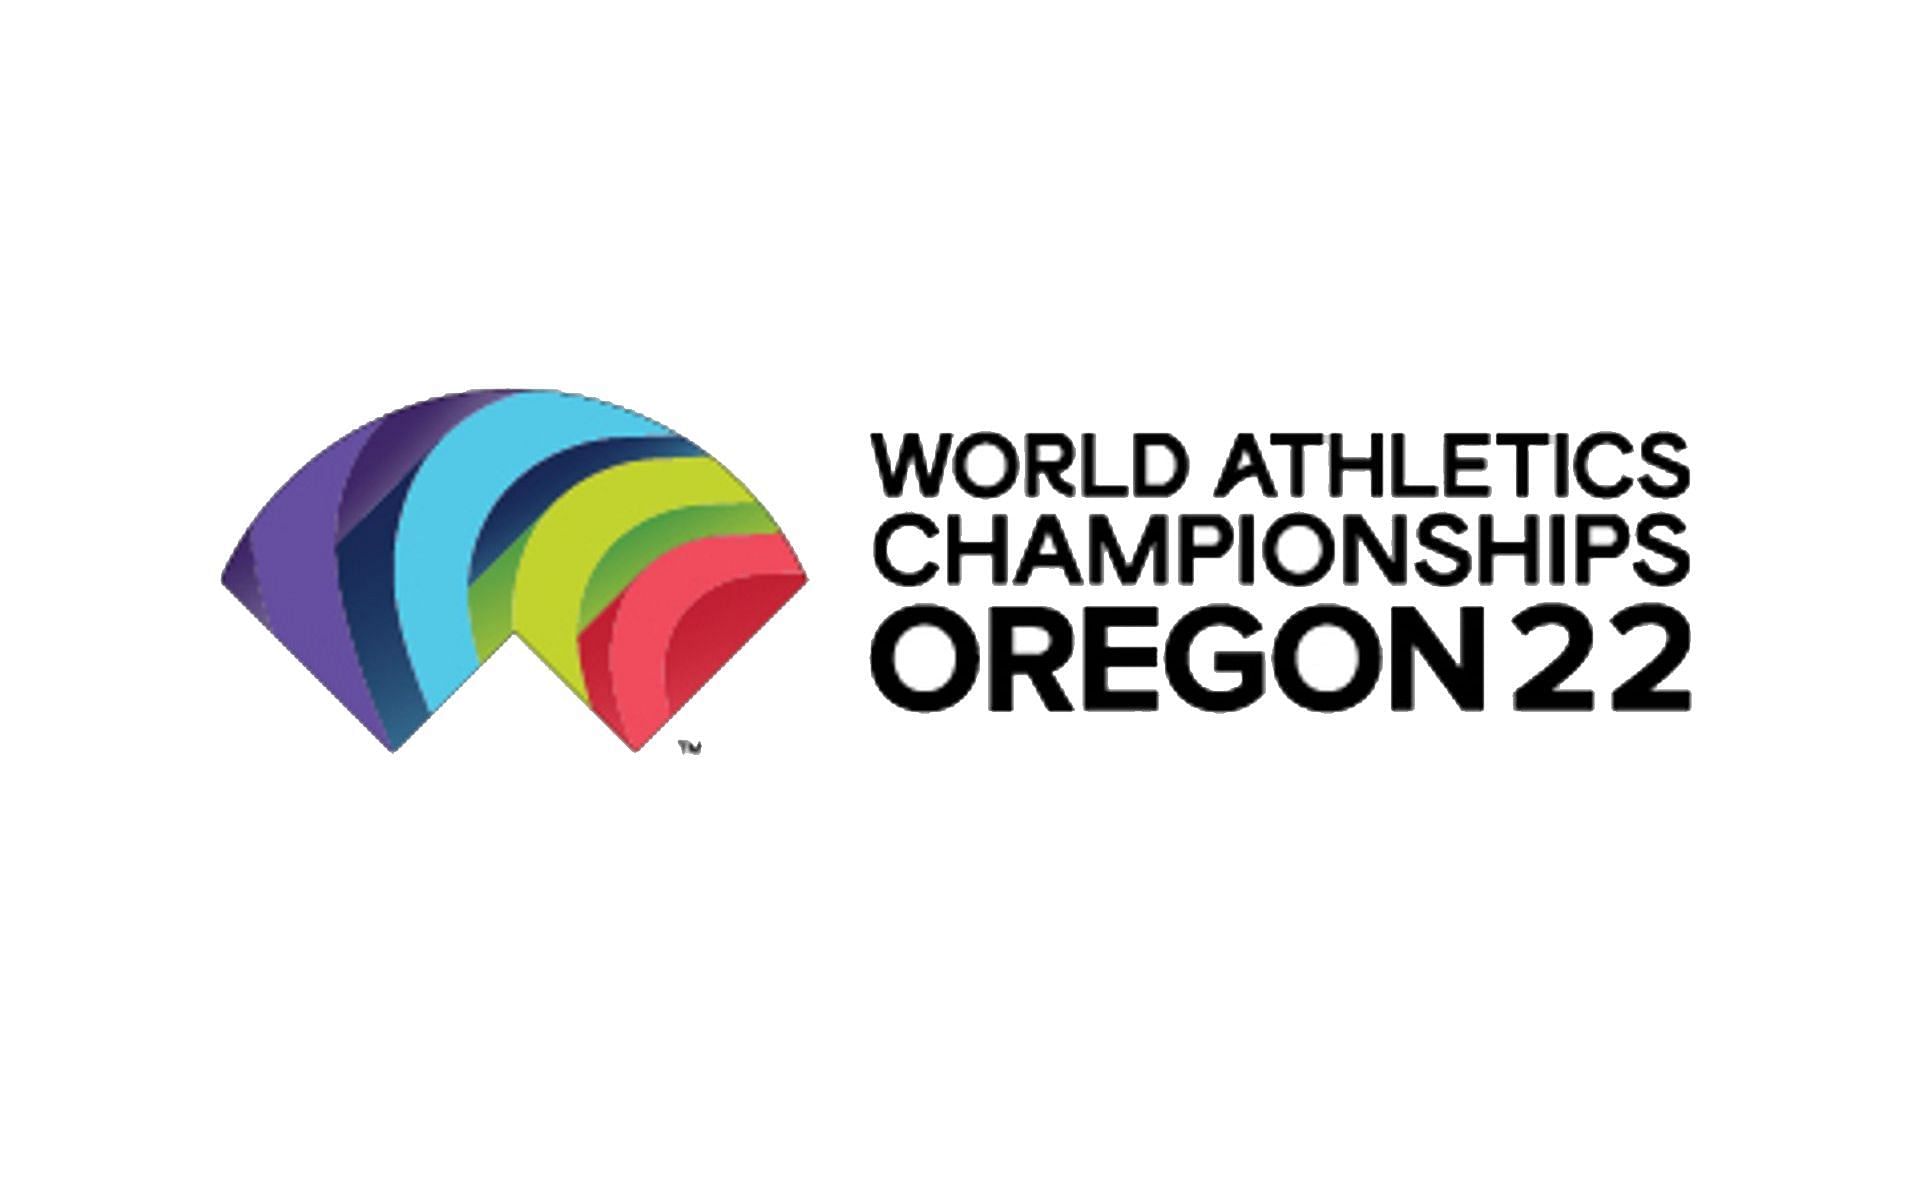 World Athletics Championships 2022 will be held in Oregon, USA (Image via World Athletics)